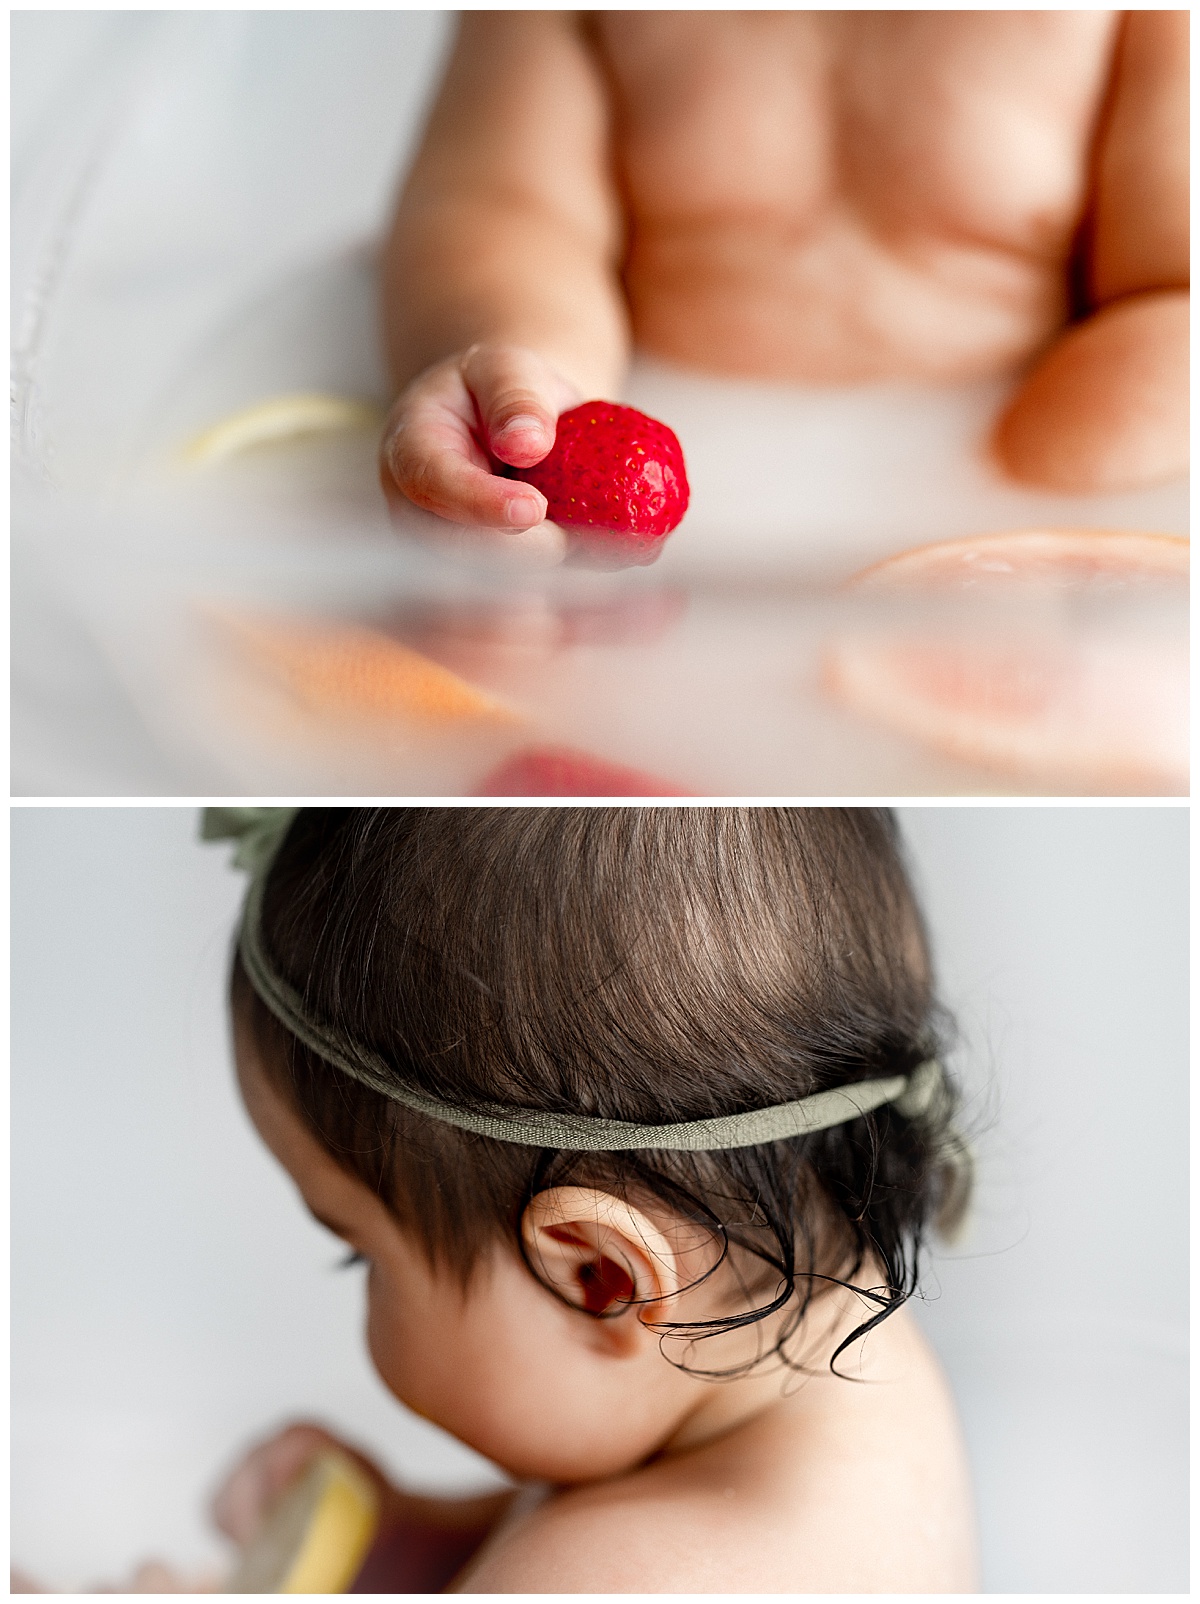 Baby enjoys fruit bath for Virginia baby photographer